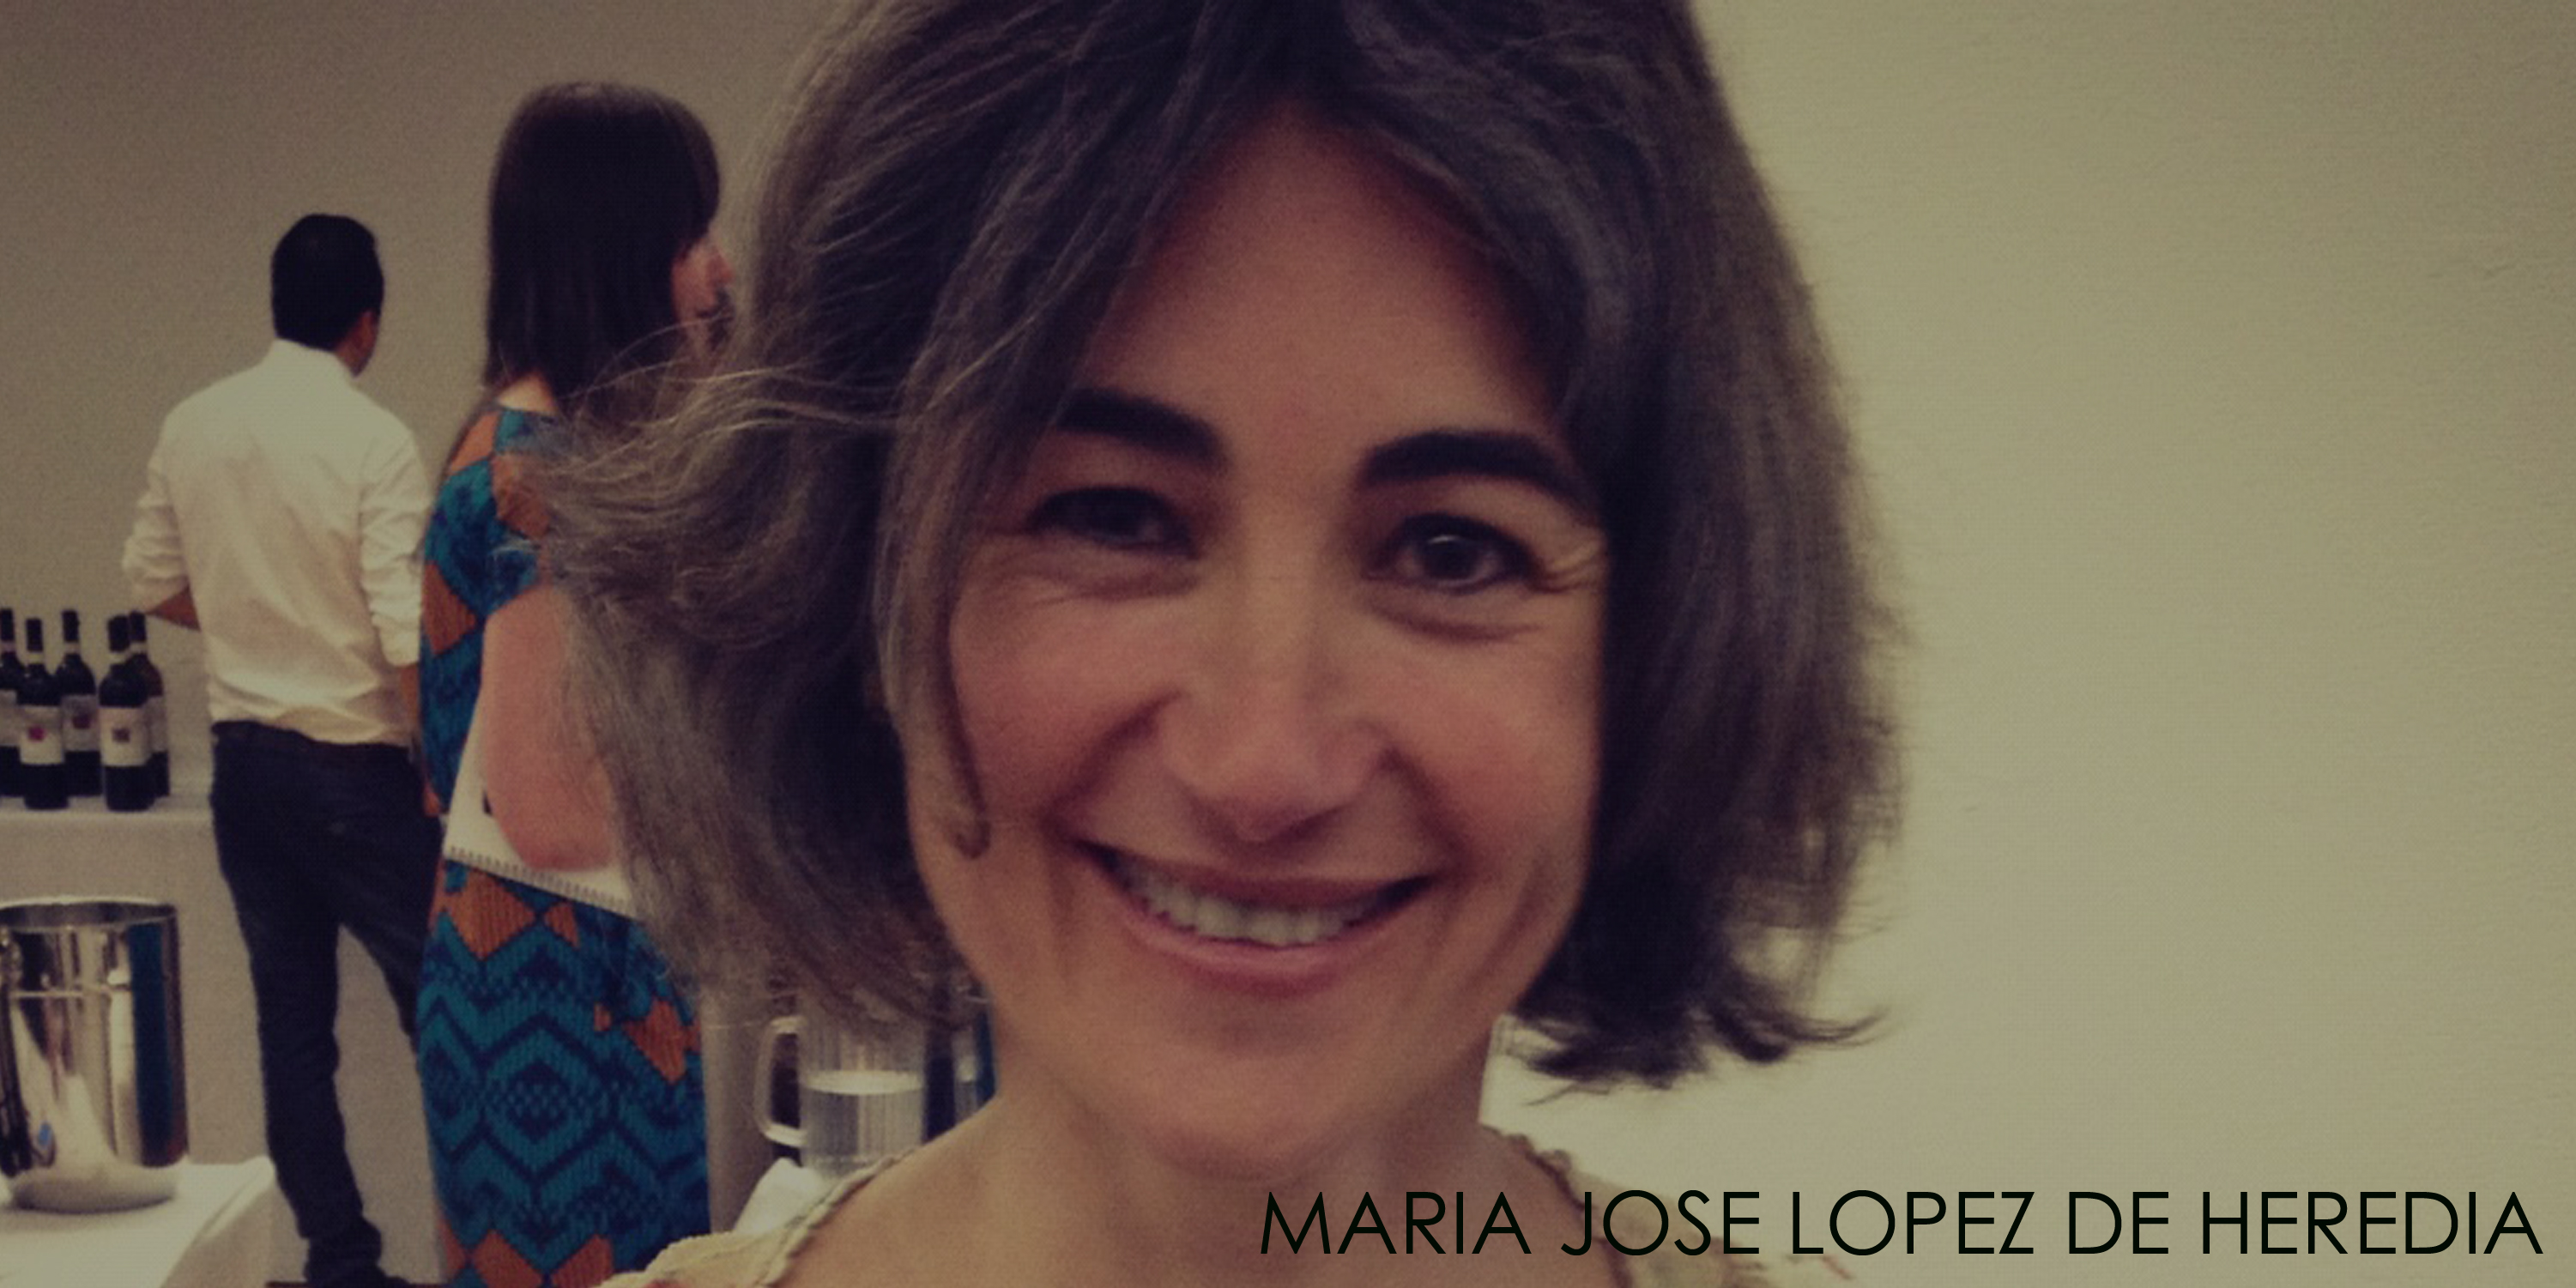 MARIA JOSE HEREDIA SPAIN HISPANIC WINE MAKERS